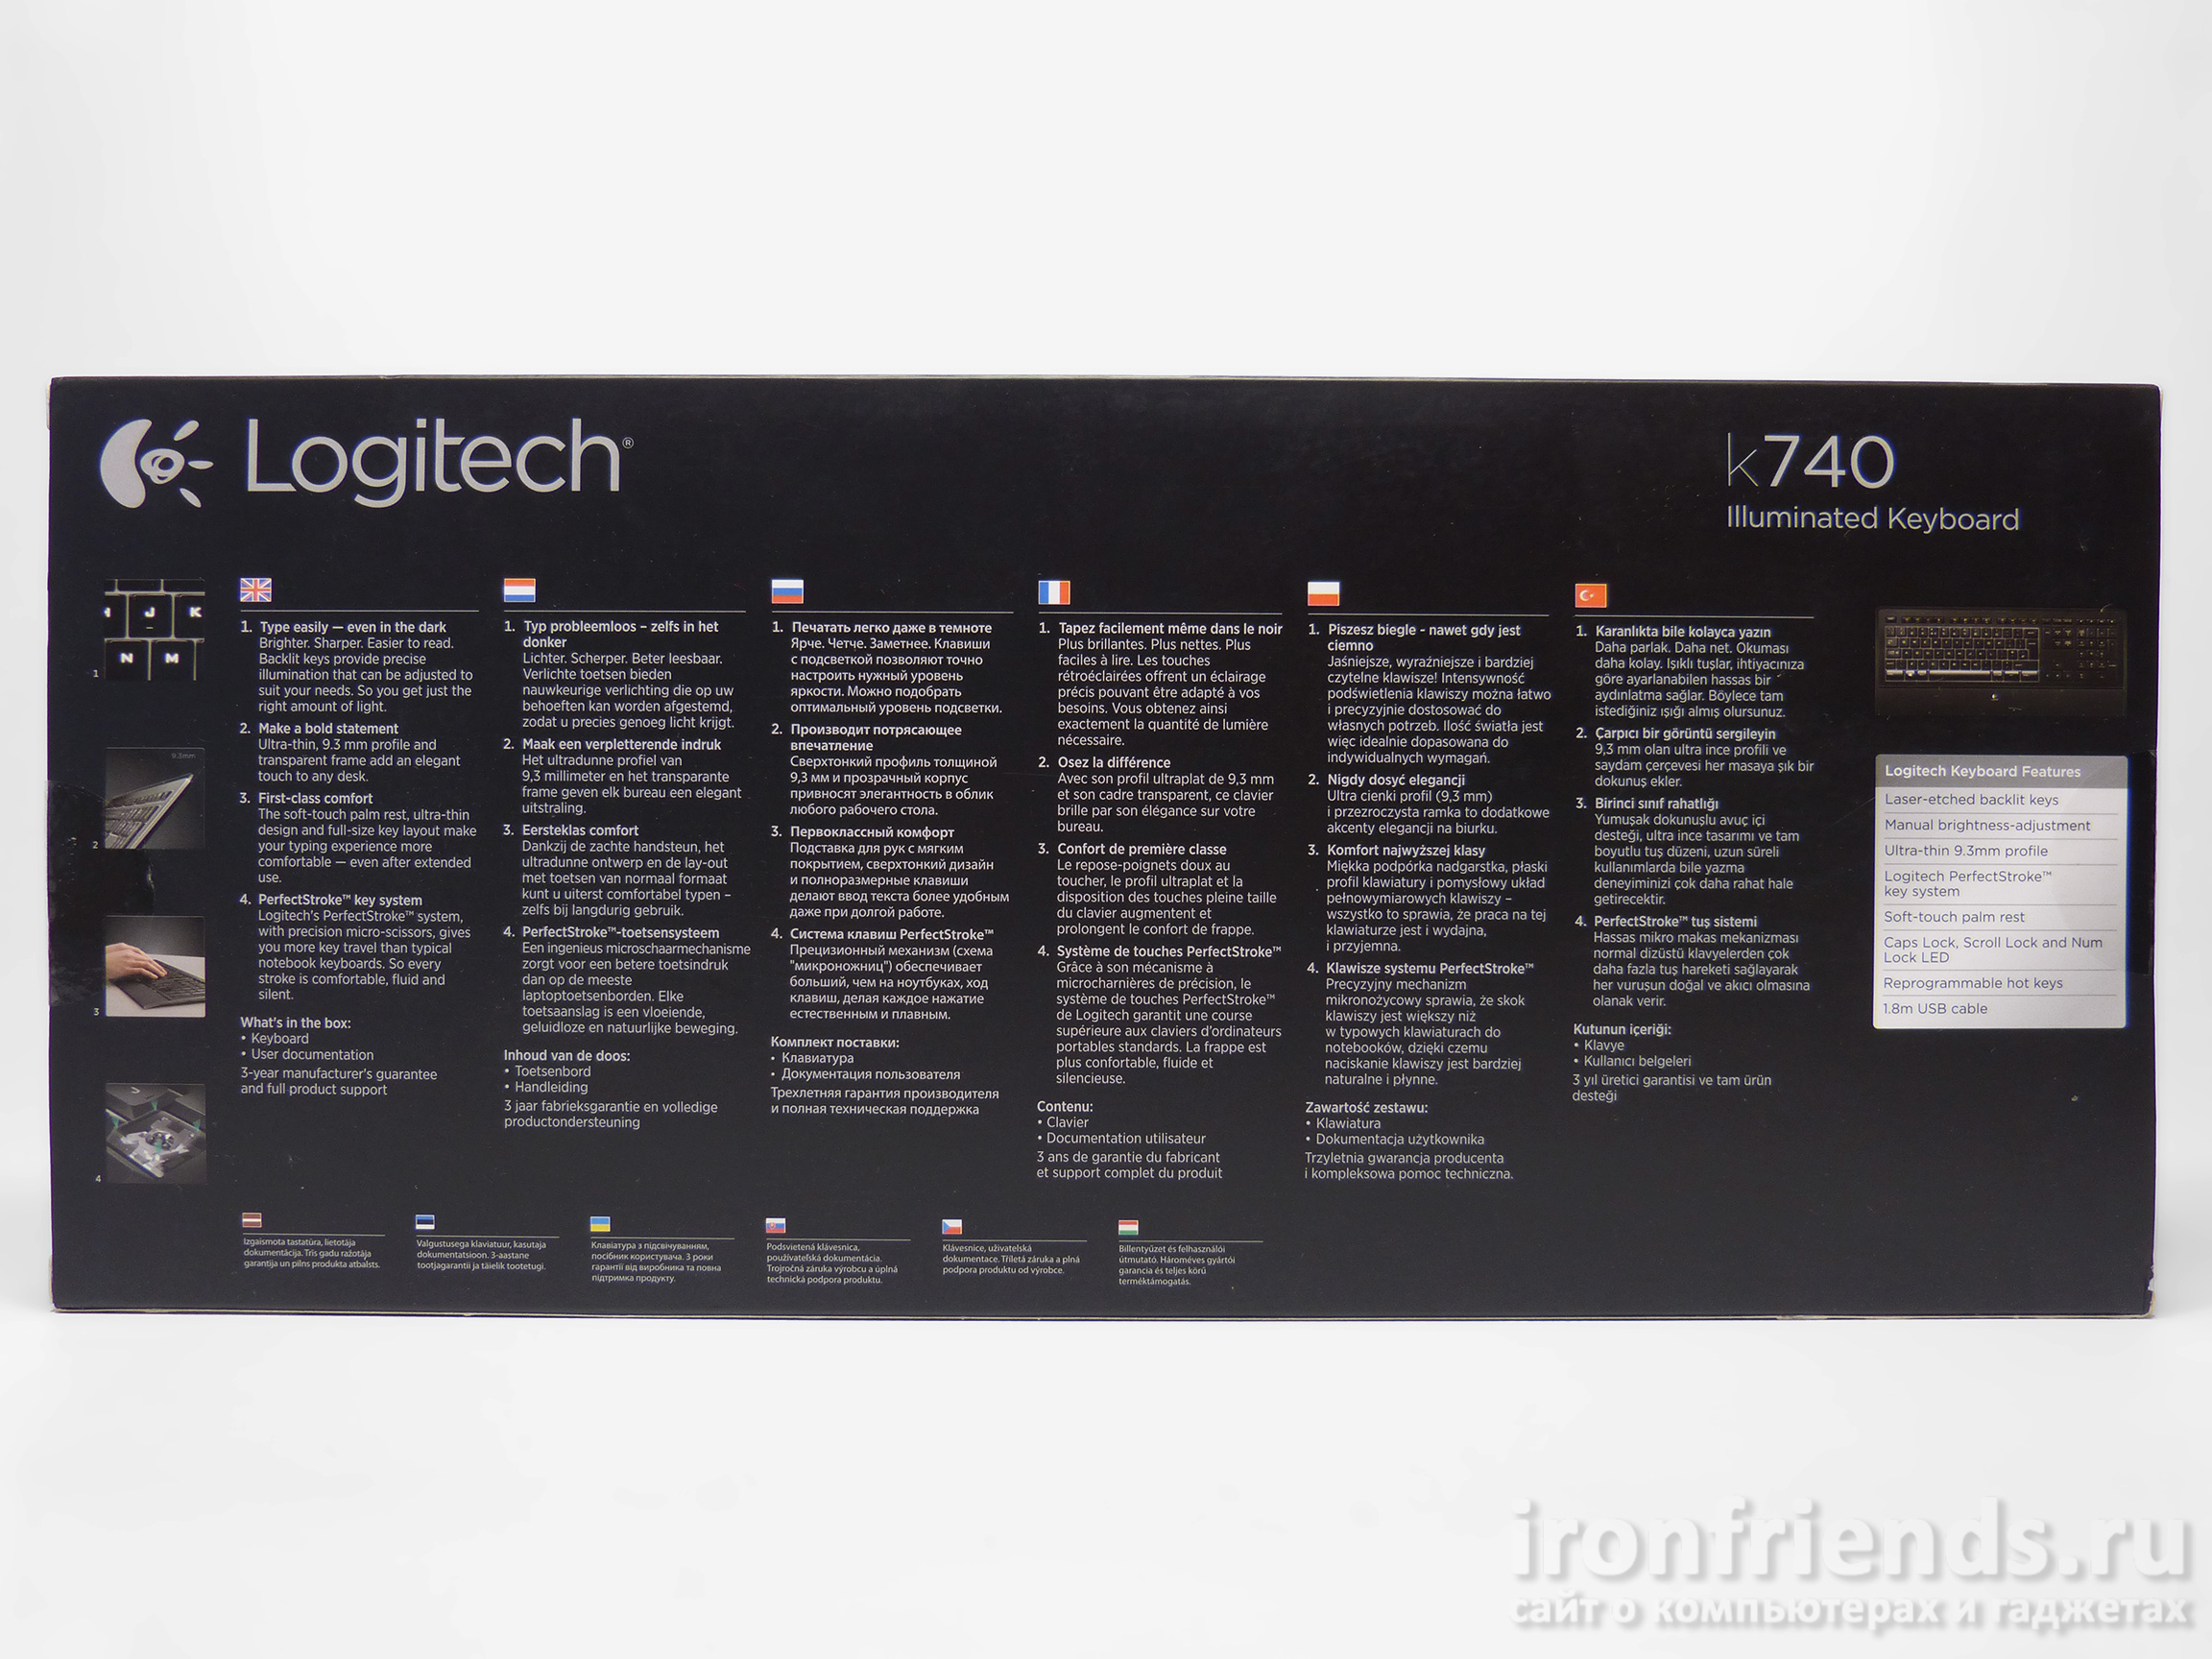 Характеристики Logitech K740 illuminated